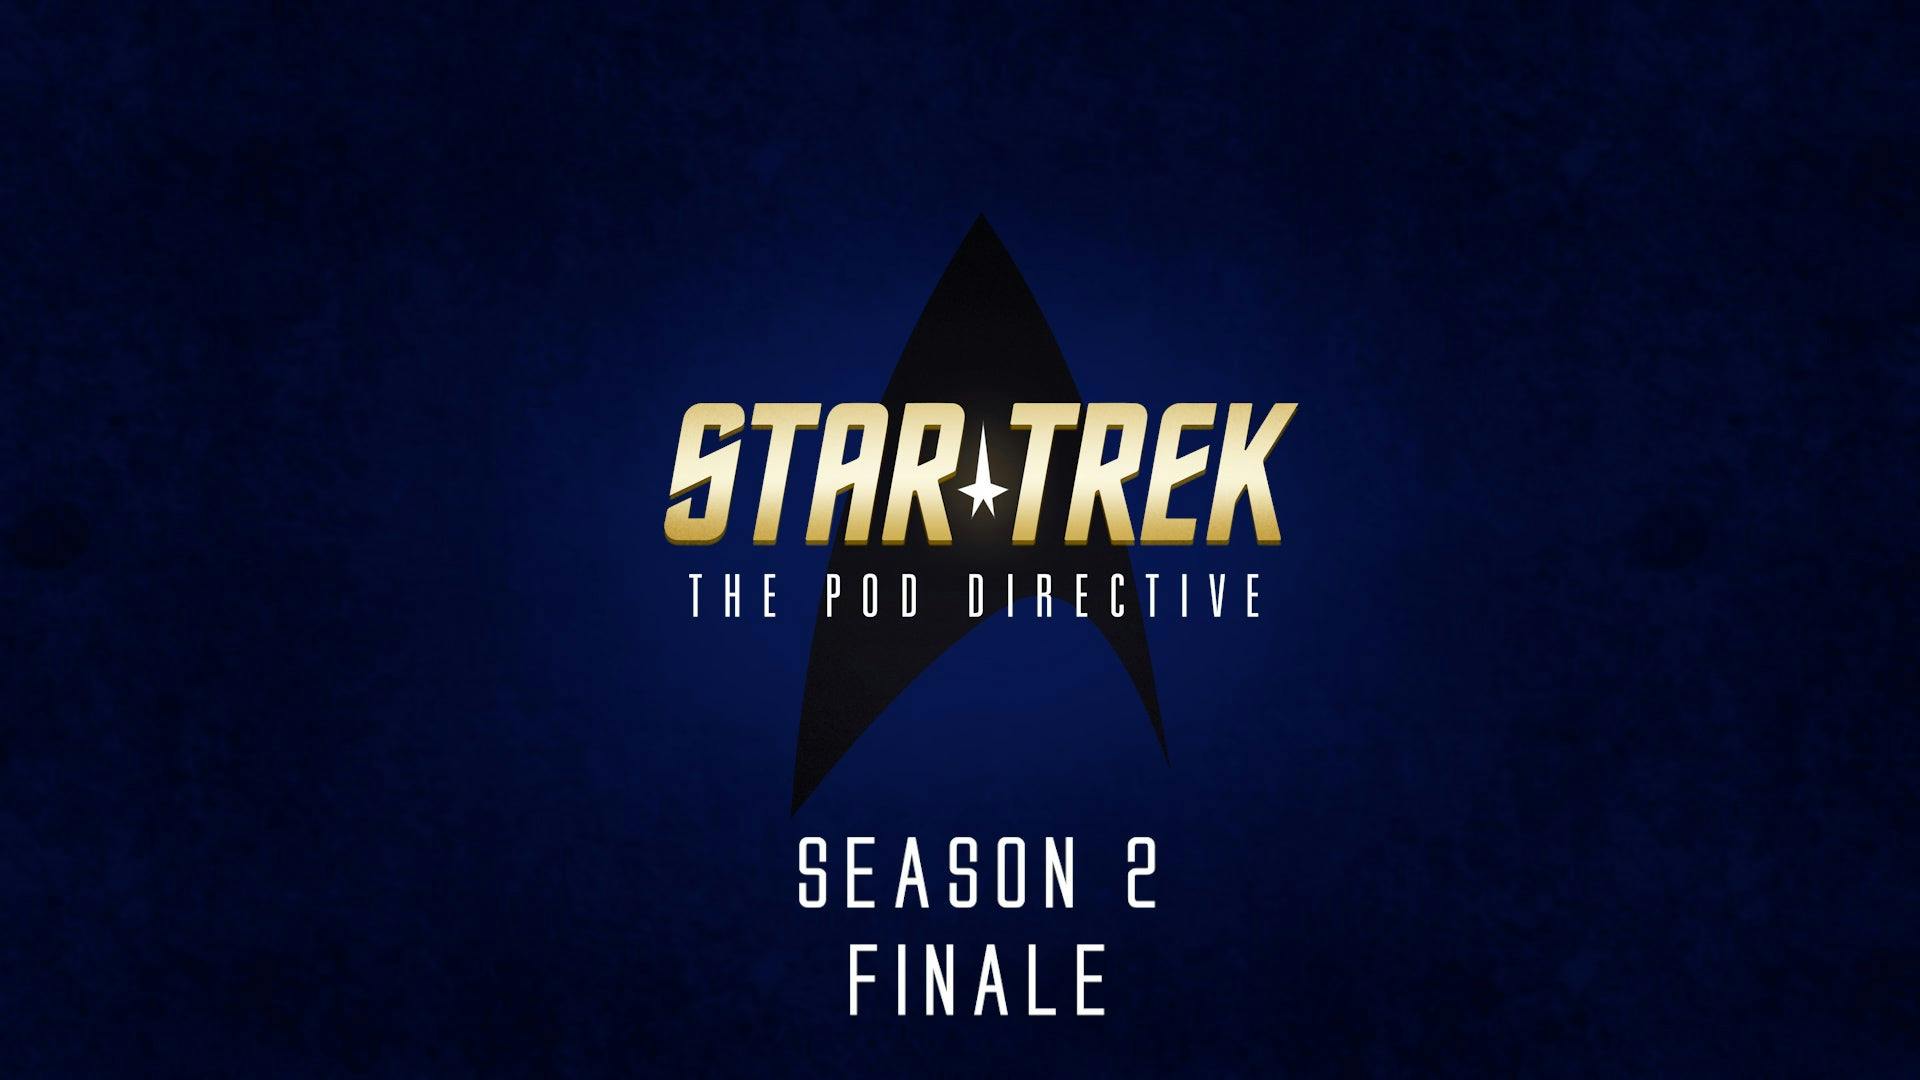 Star Trek: The Pod Directive with Season 2 Finale